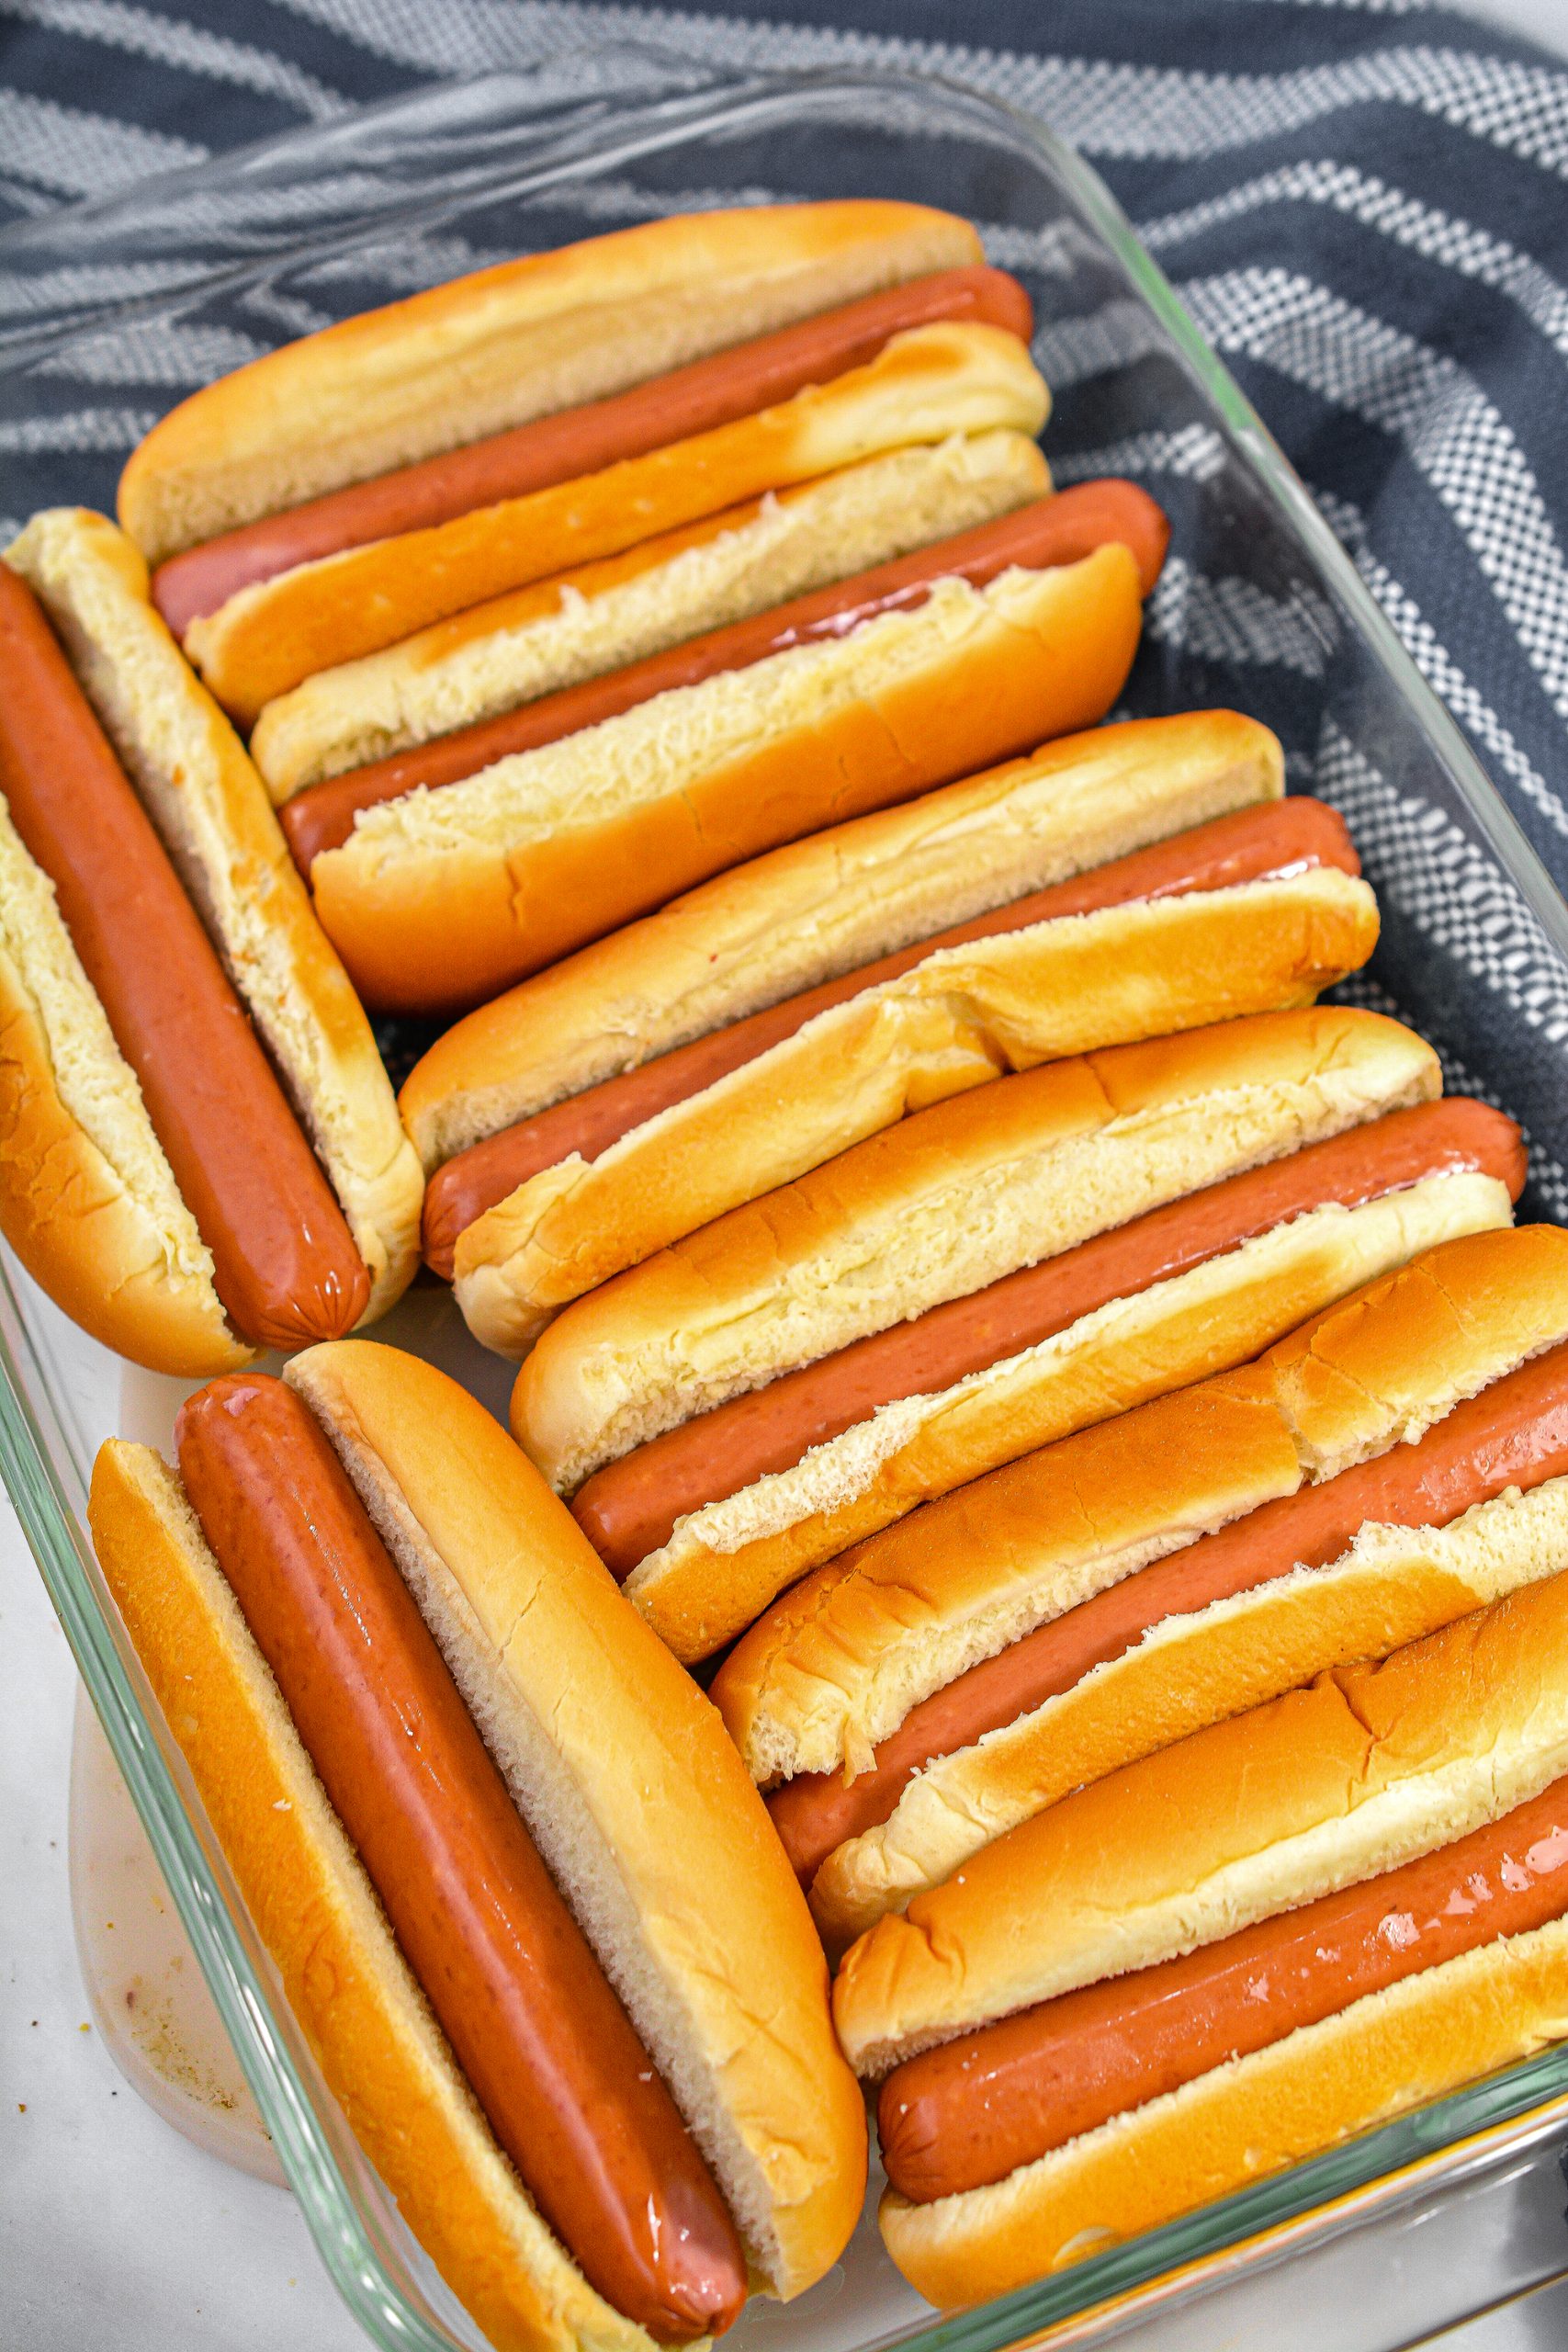 Add a hot dog to each bun.